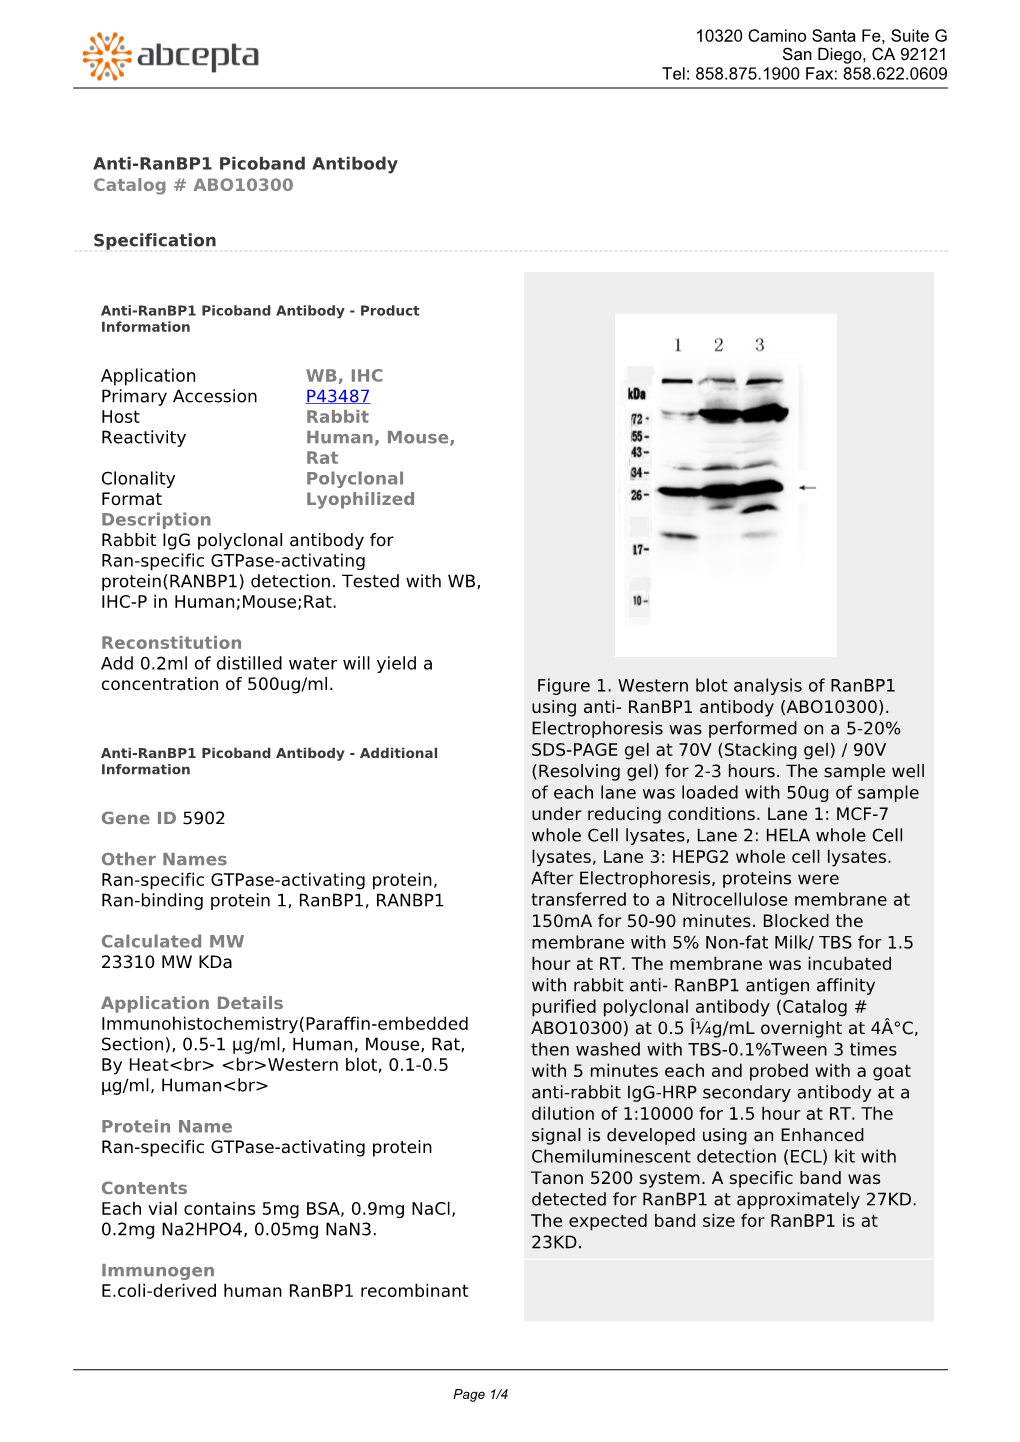 Anti-Ranbp1 Picoband Antibody Catalog # ABO10300